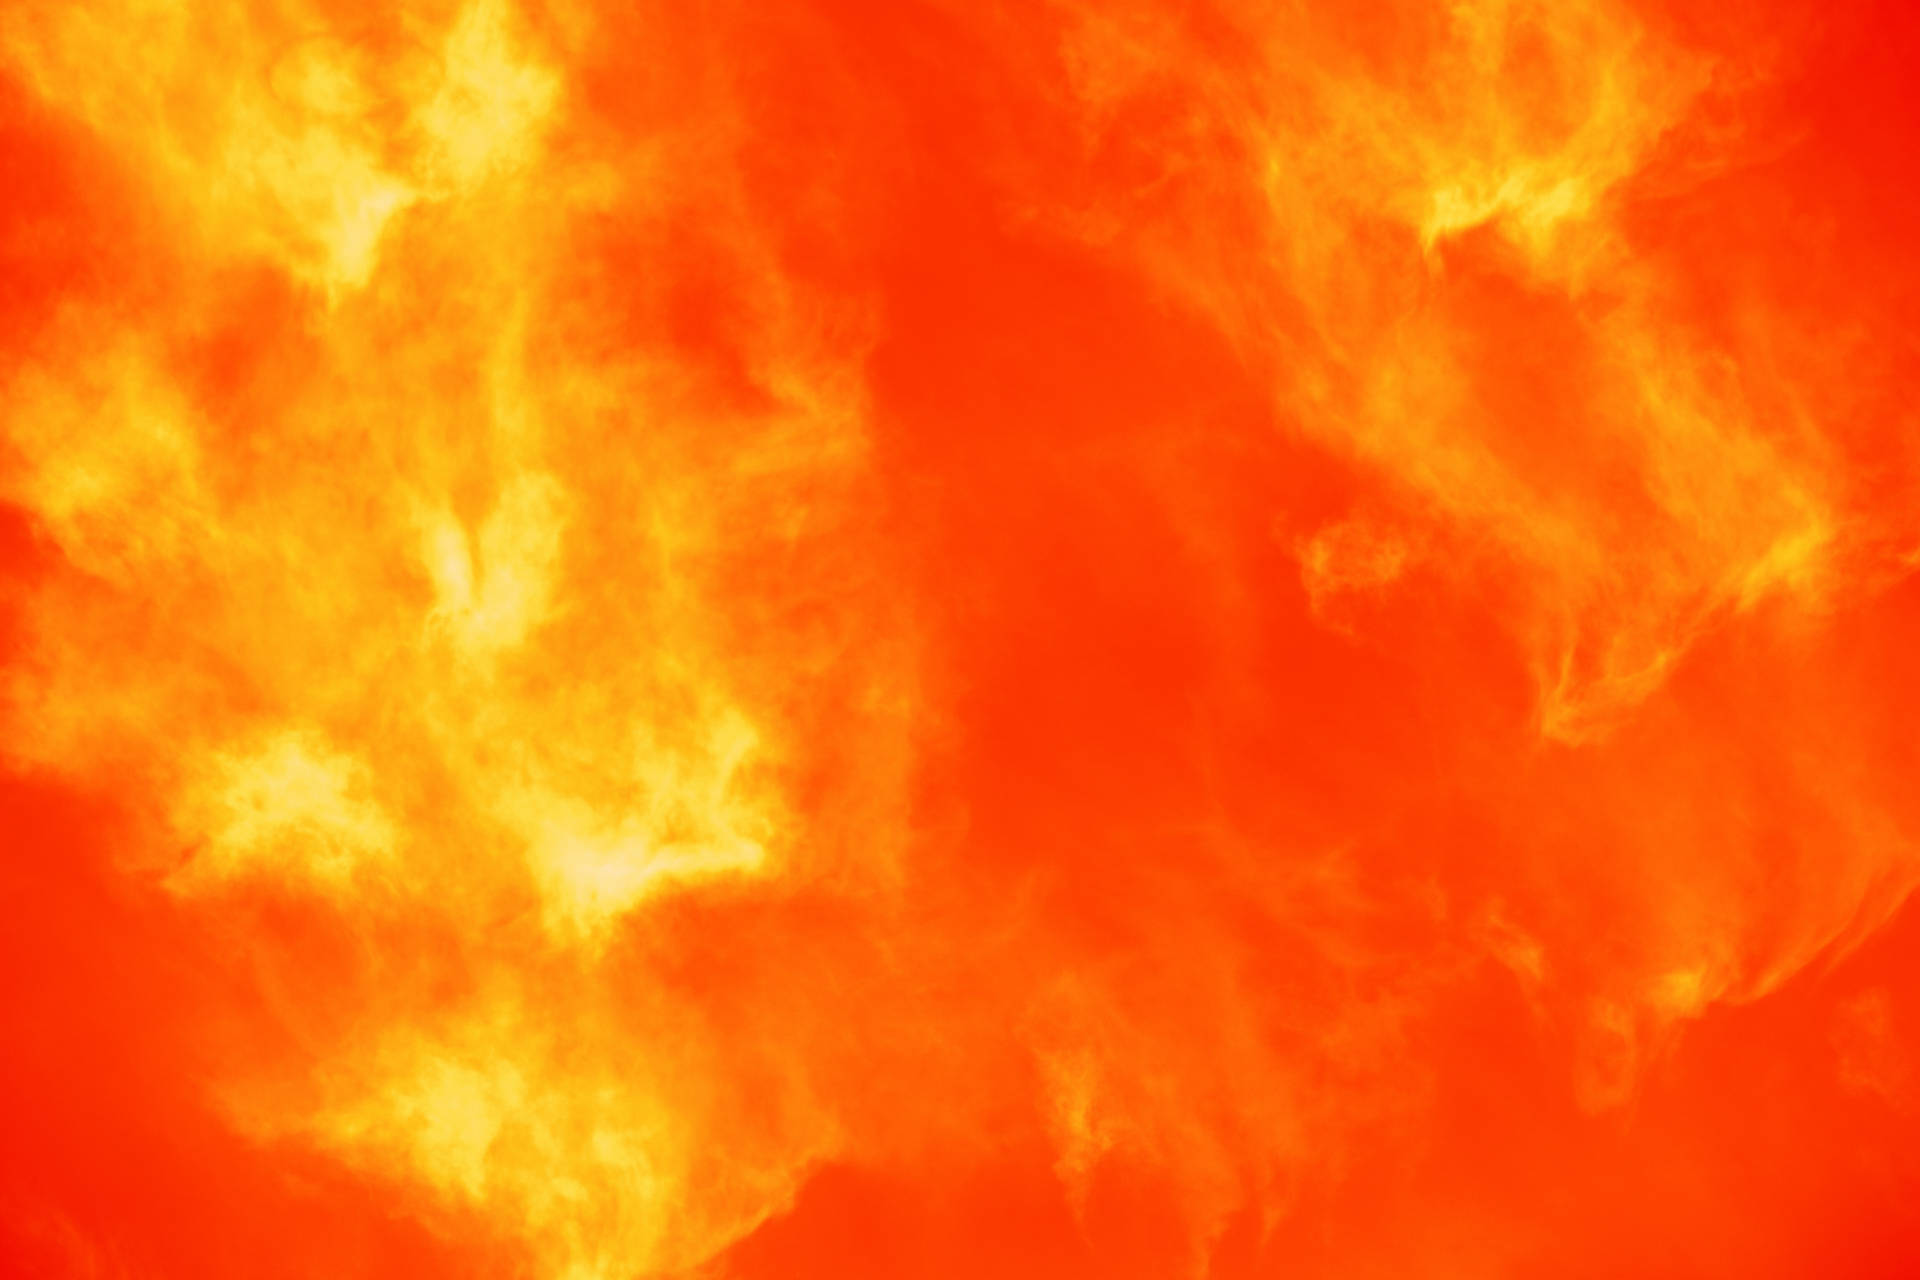 Burning Orange Screen Cover Background